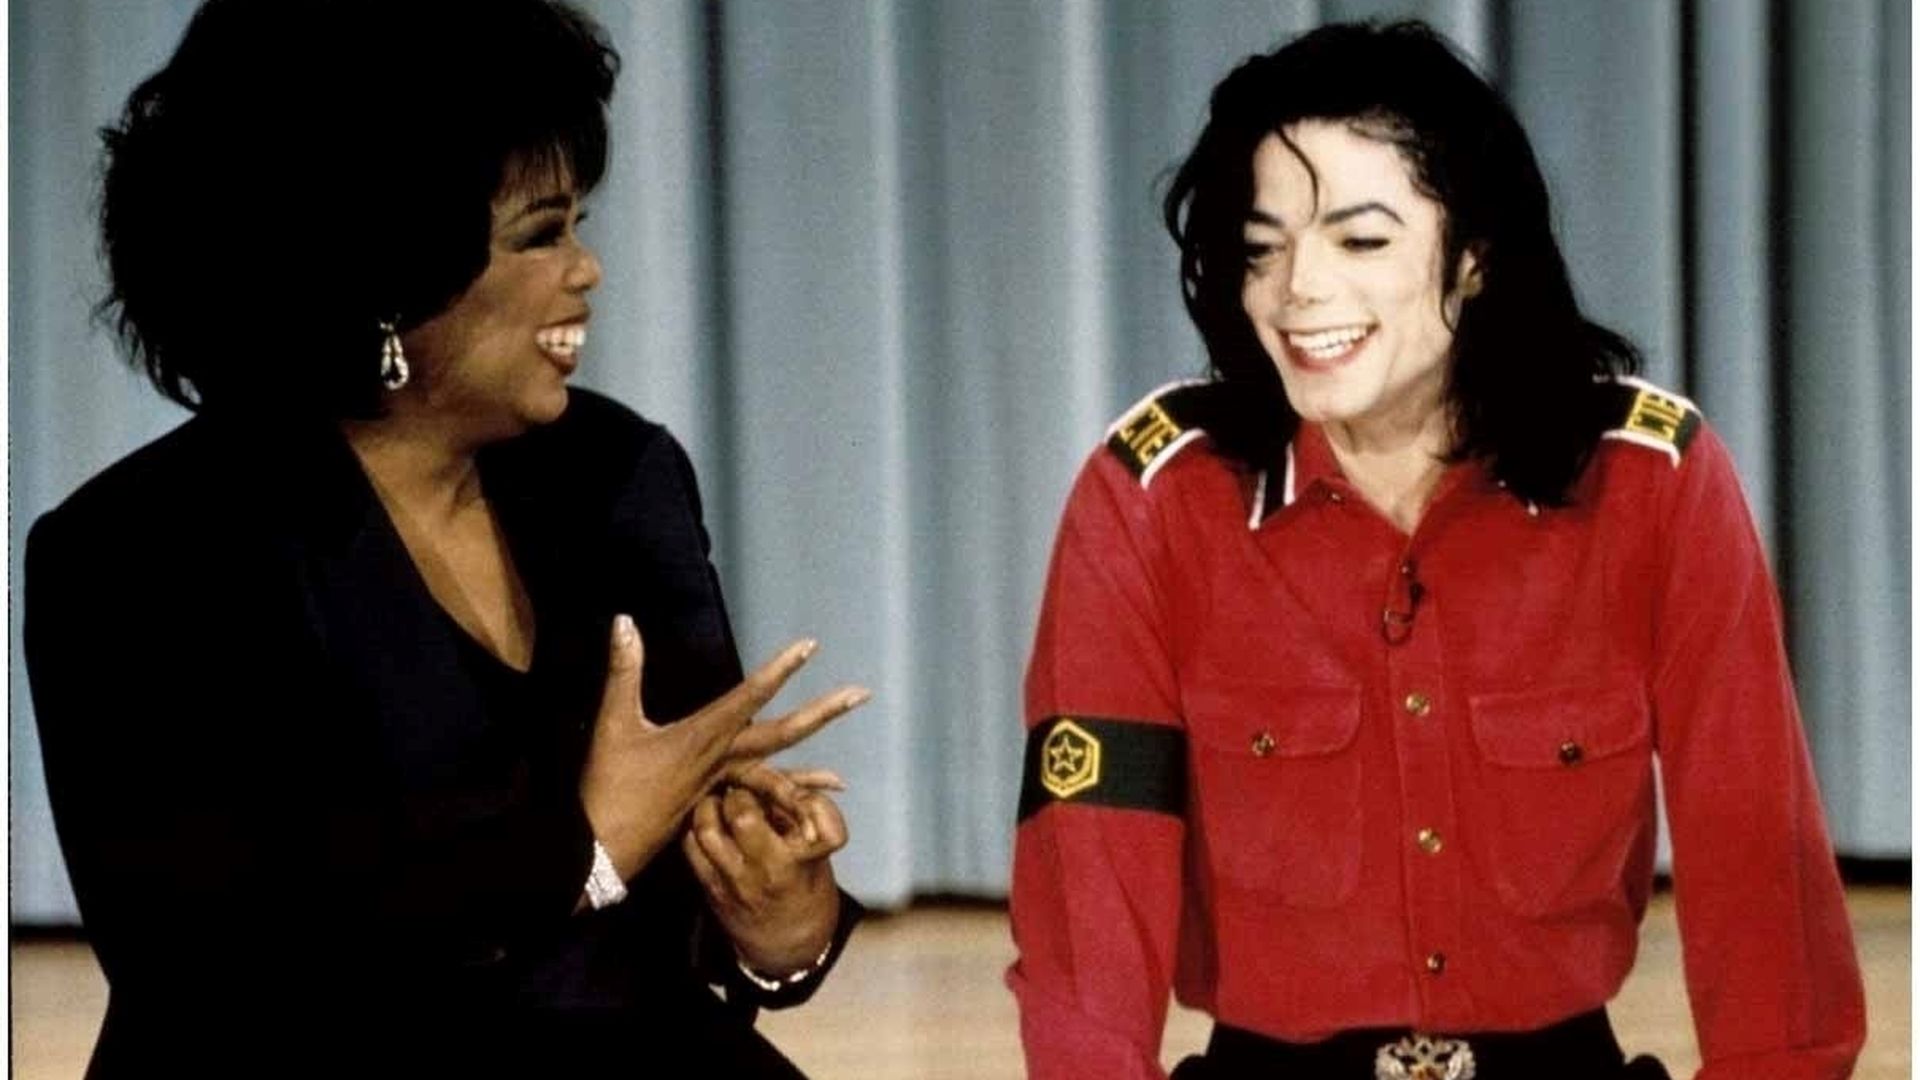 Michael Jackson Talks to Oprah Winfrey (1993)